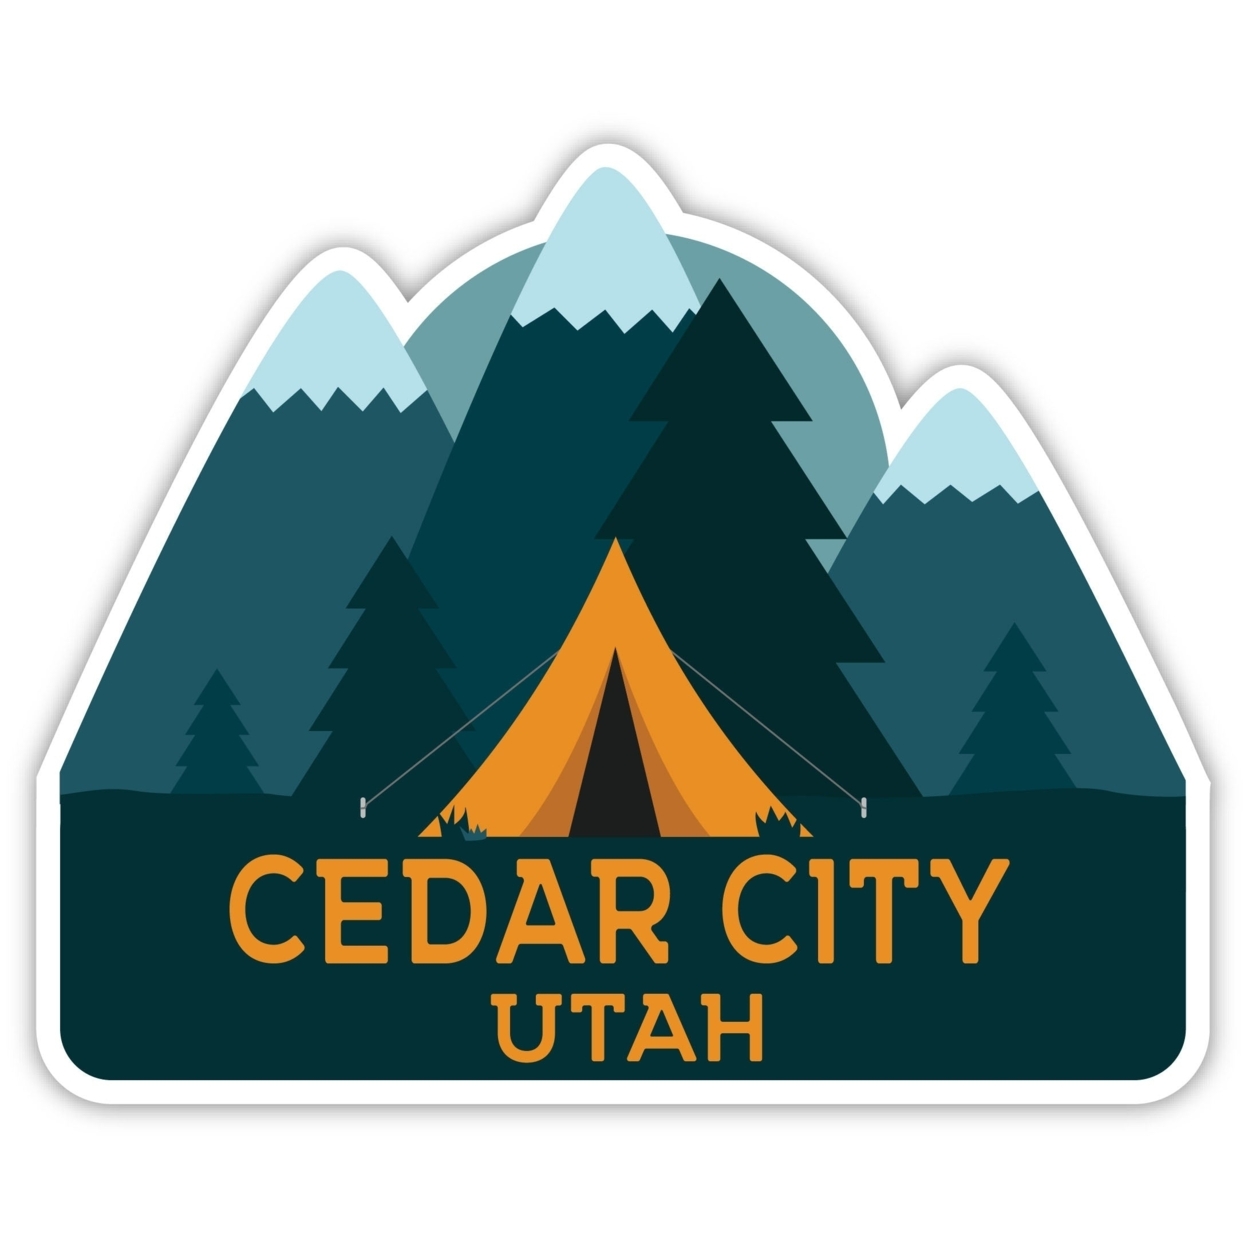 Cedar City Utah Souvenir Decorative Stickers (Choose Theme And Size) - 4-Pack, 2-Inch, Adventures Awaits